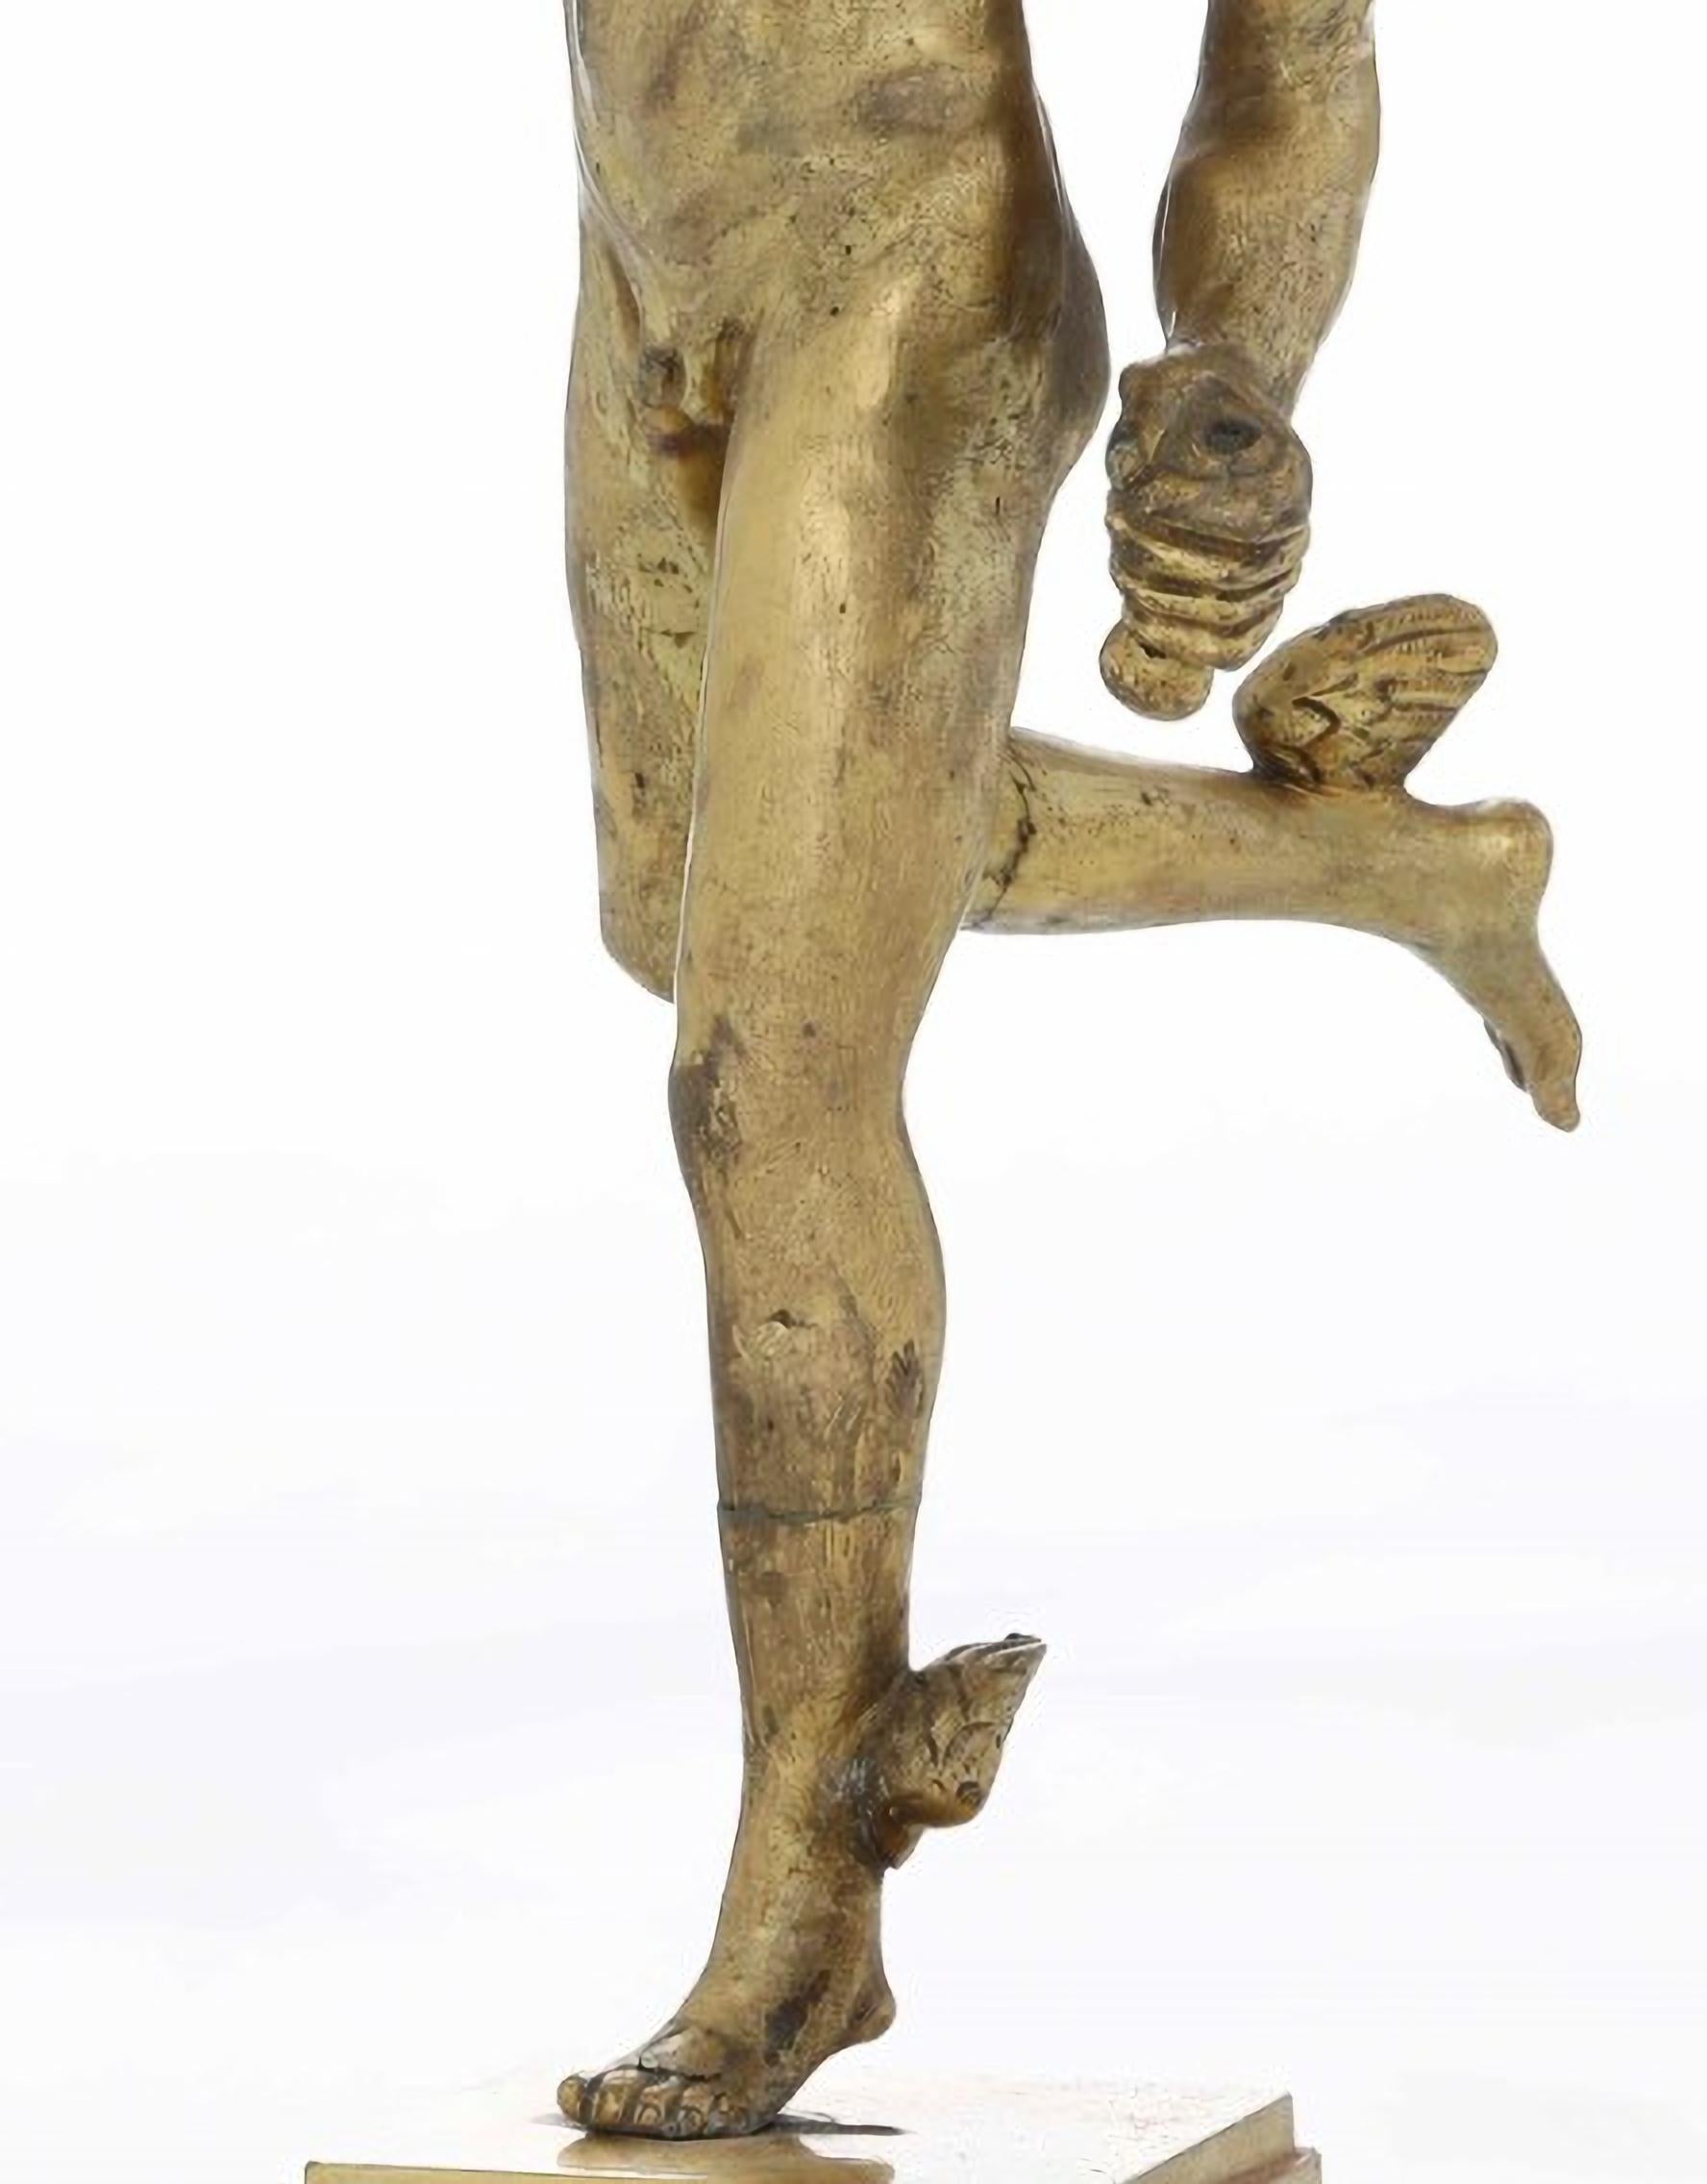 A Italian Gilt Bronze Hermes 19th Century
H: 30cm
very good condition.